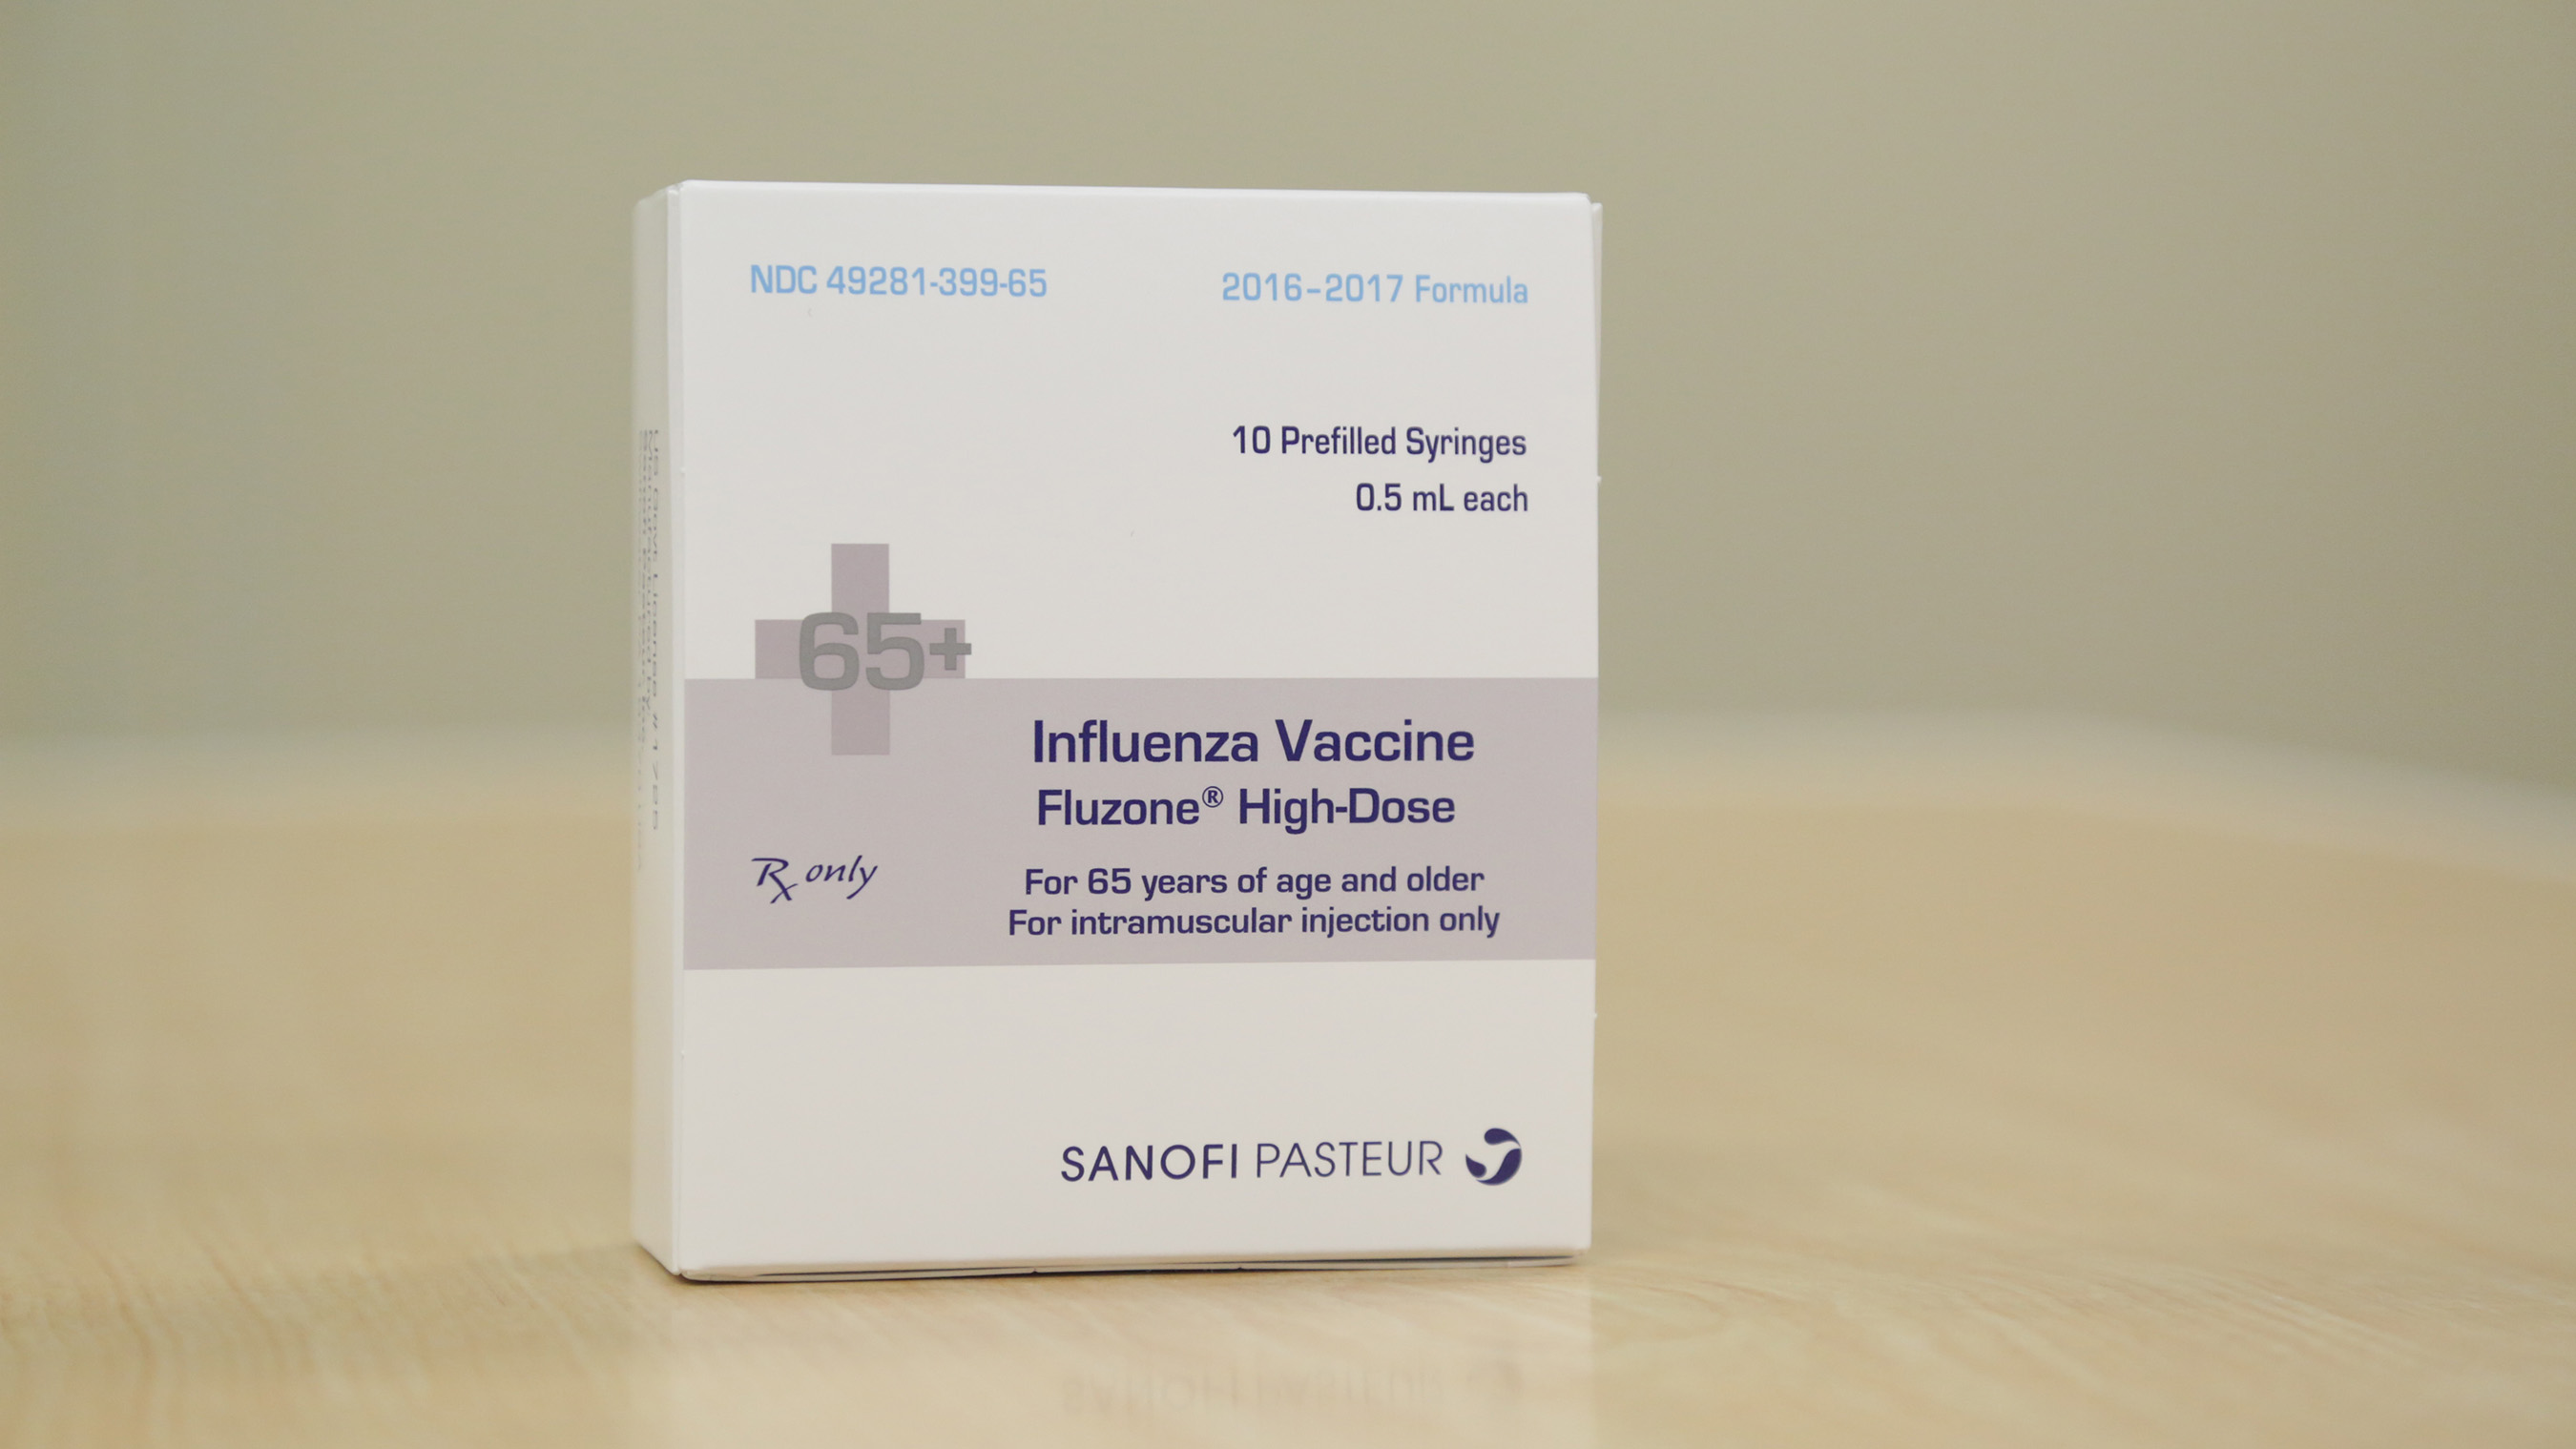 sanofi pasteur travel vaccination record